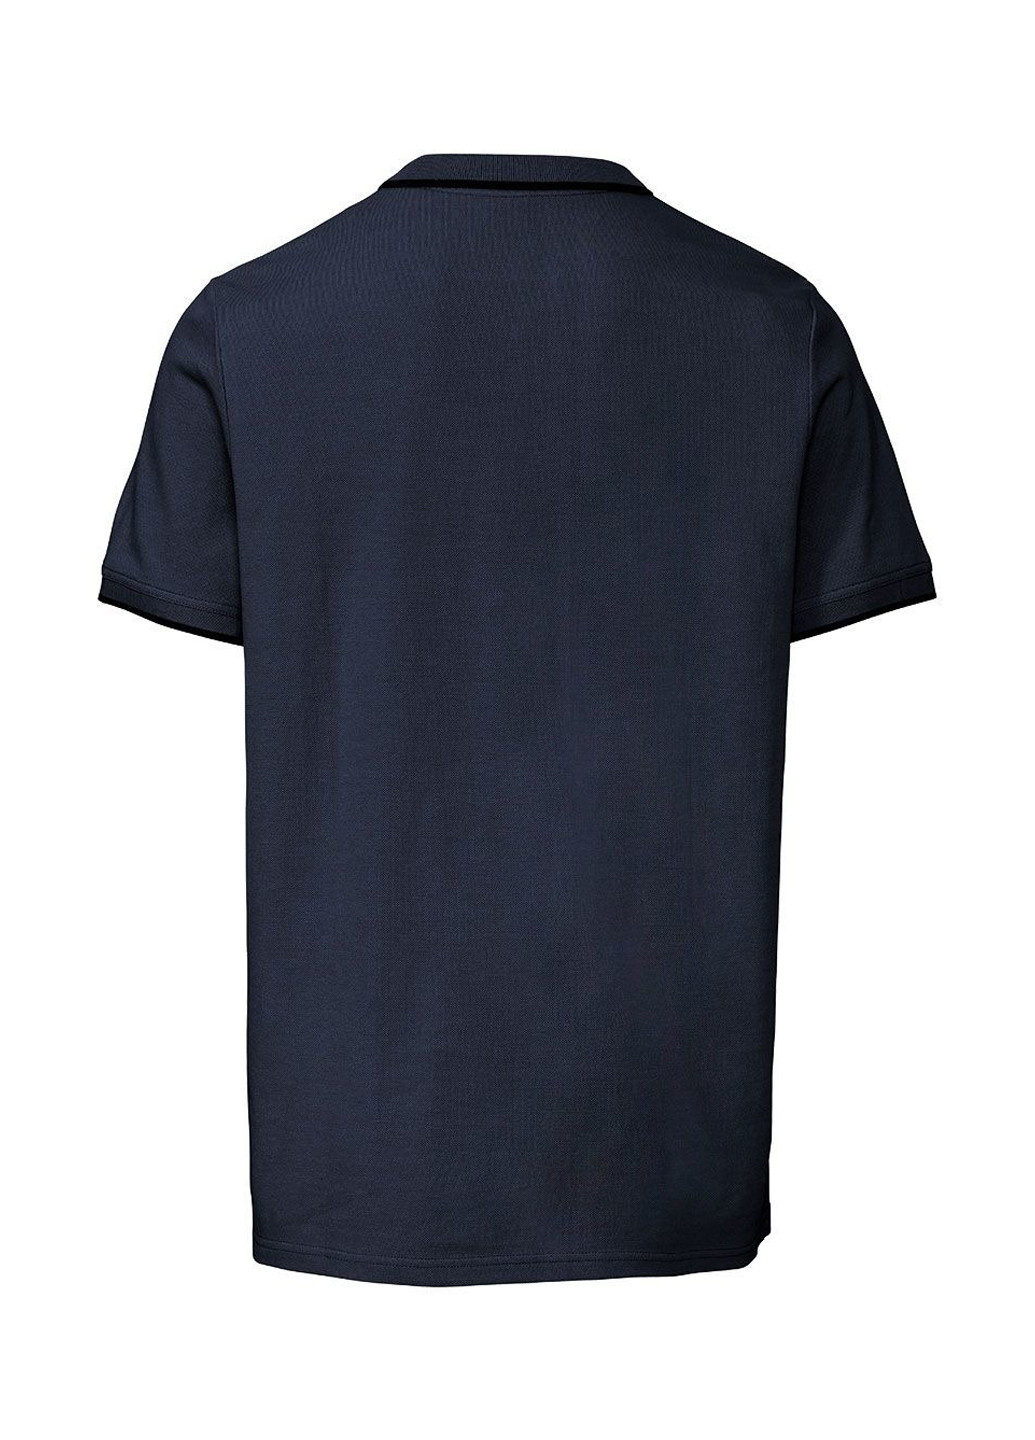 Темно-синяя футболка-поло для мужчин Livergy однотонная